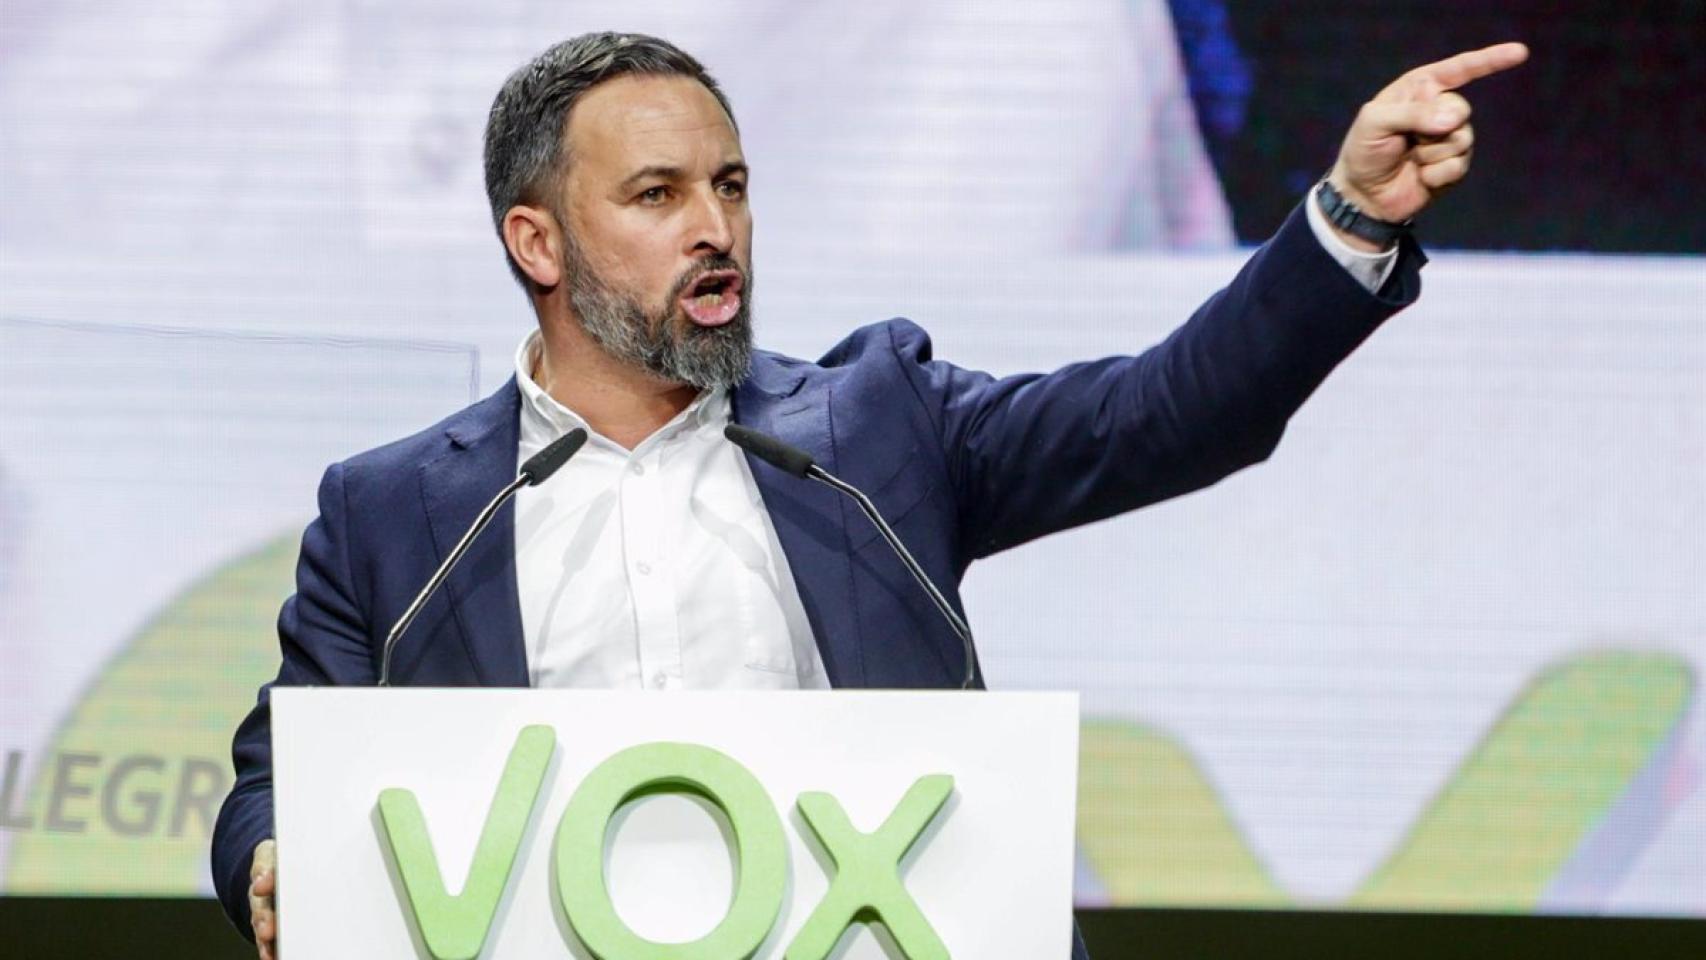 El líder de Vox, Santiago Abascal. EP